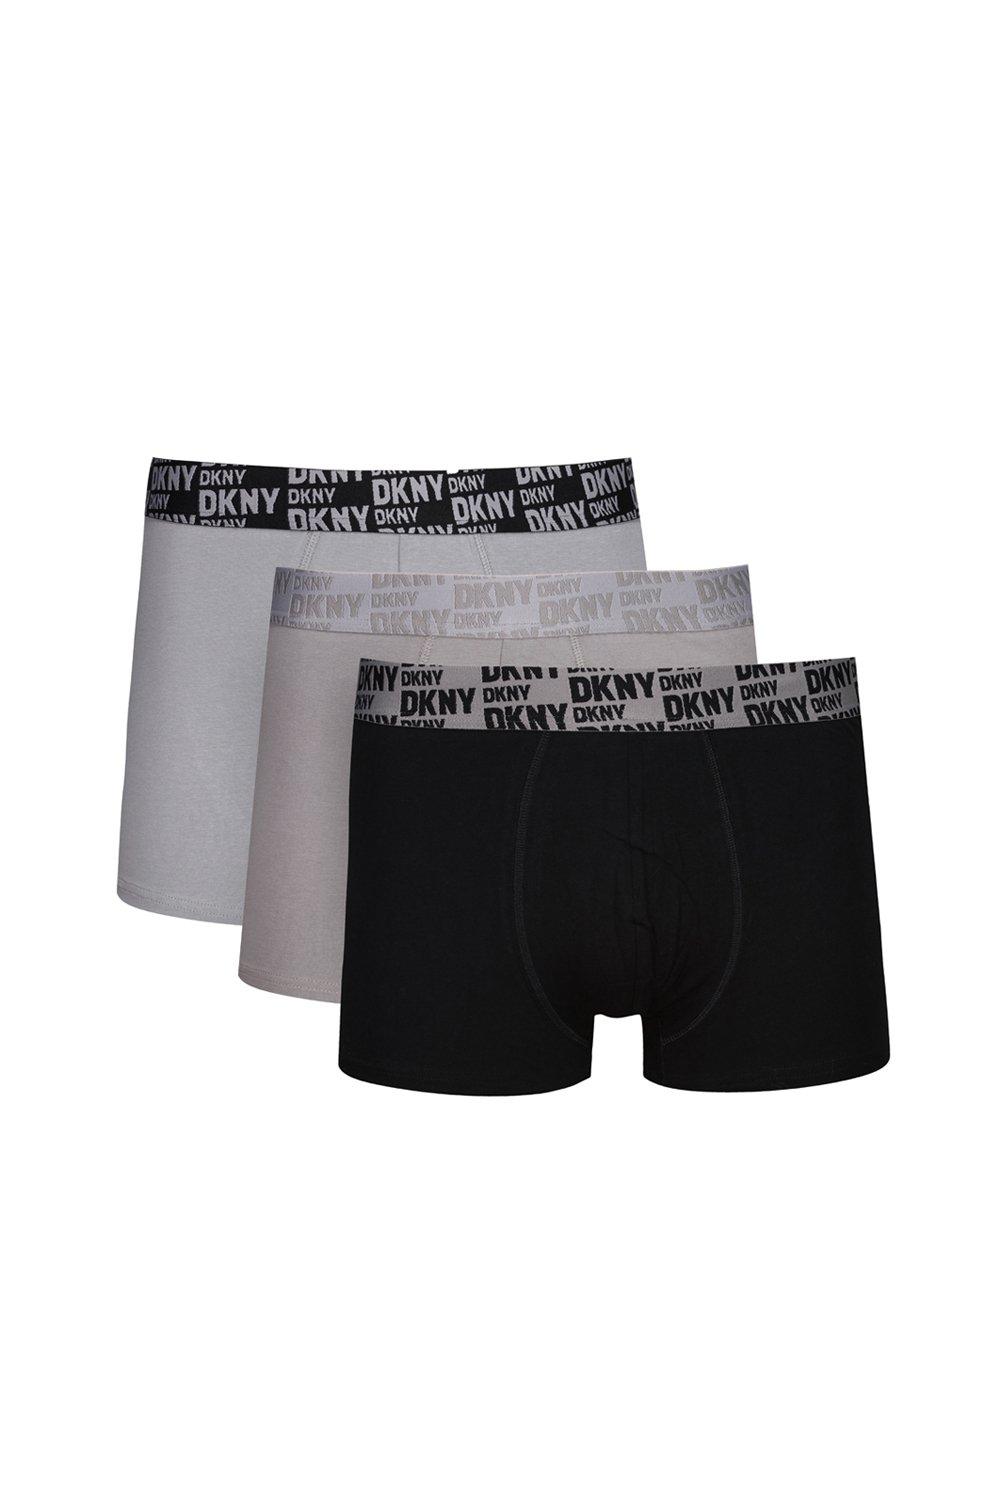 Underwear & Socks | Lewisville 3 Pack Trunks | DKNY